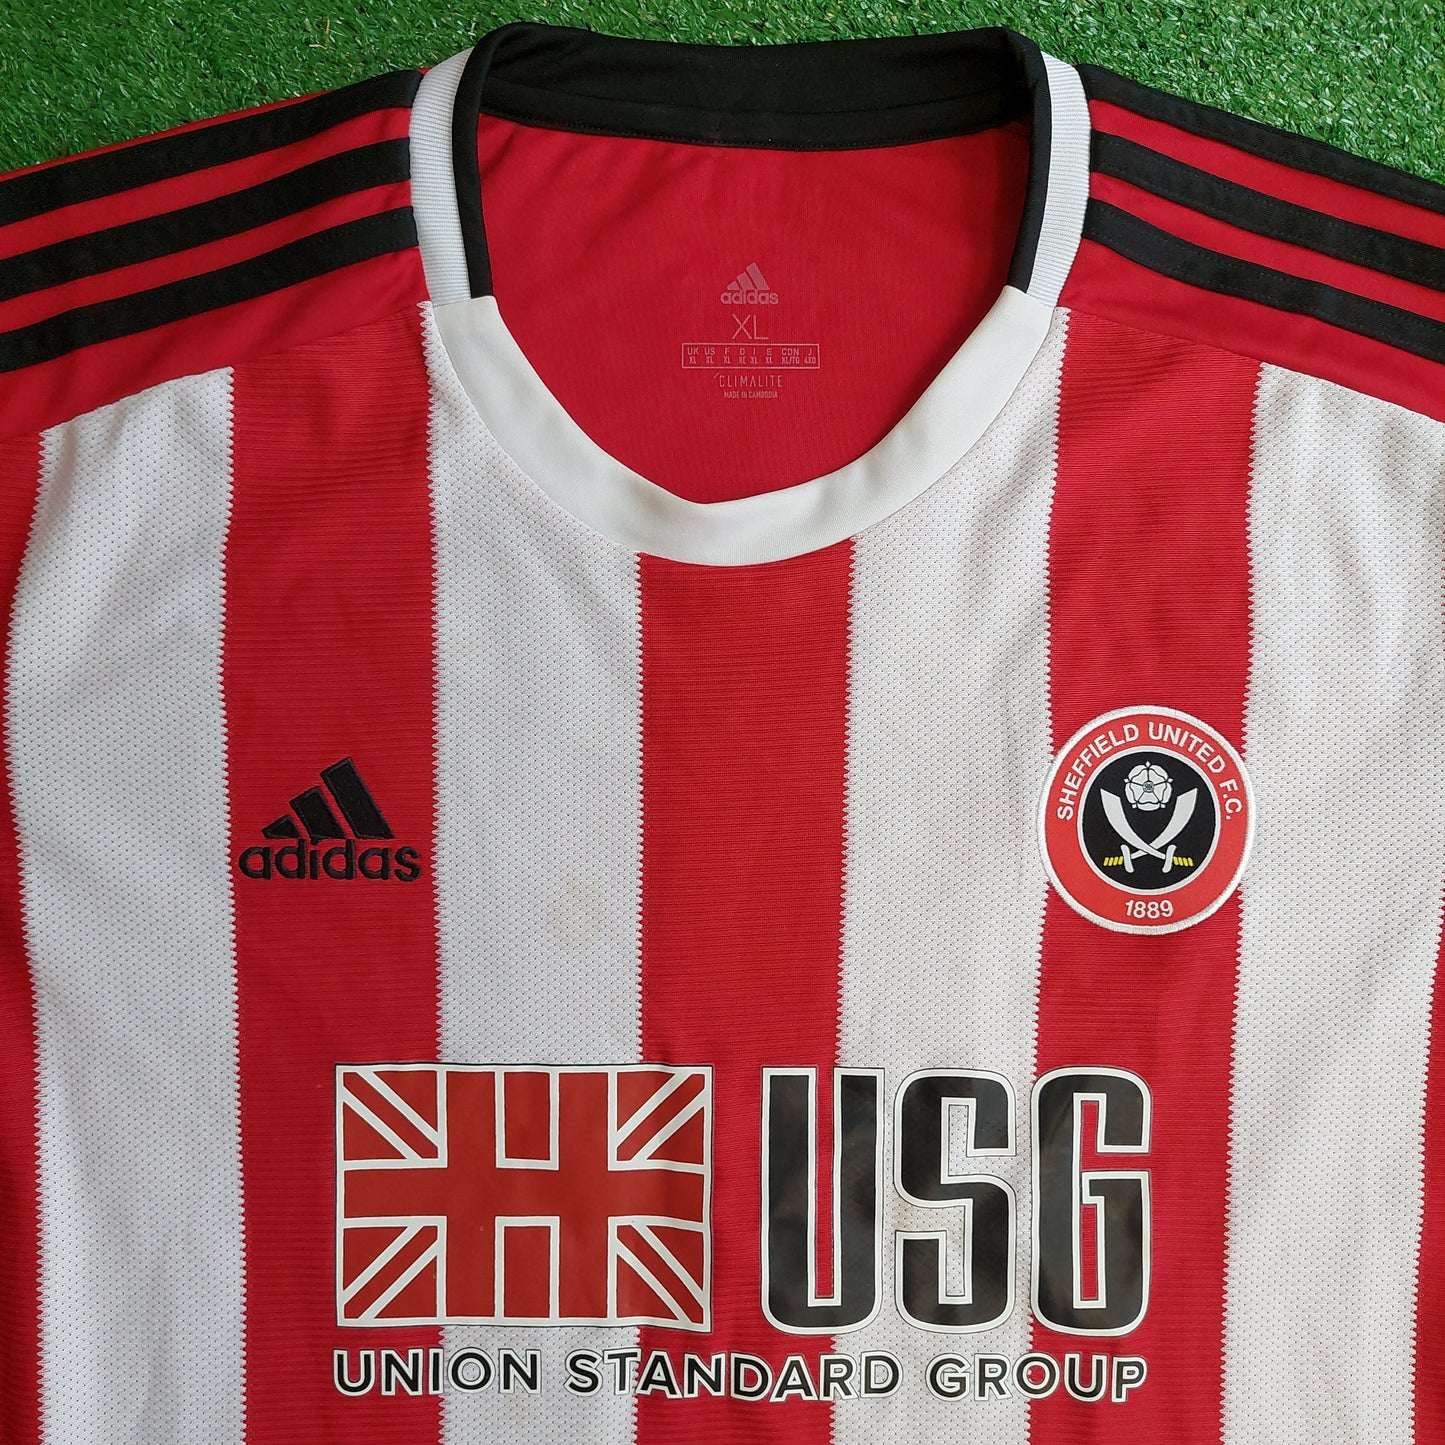 Sheffield United 2019/20 Home Shirt (Very Good) - Size XL